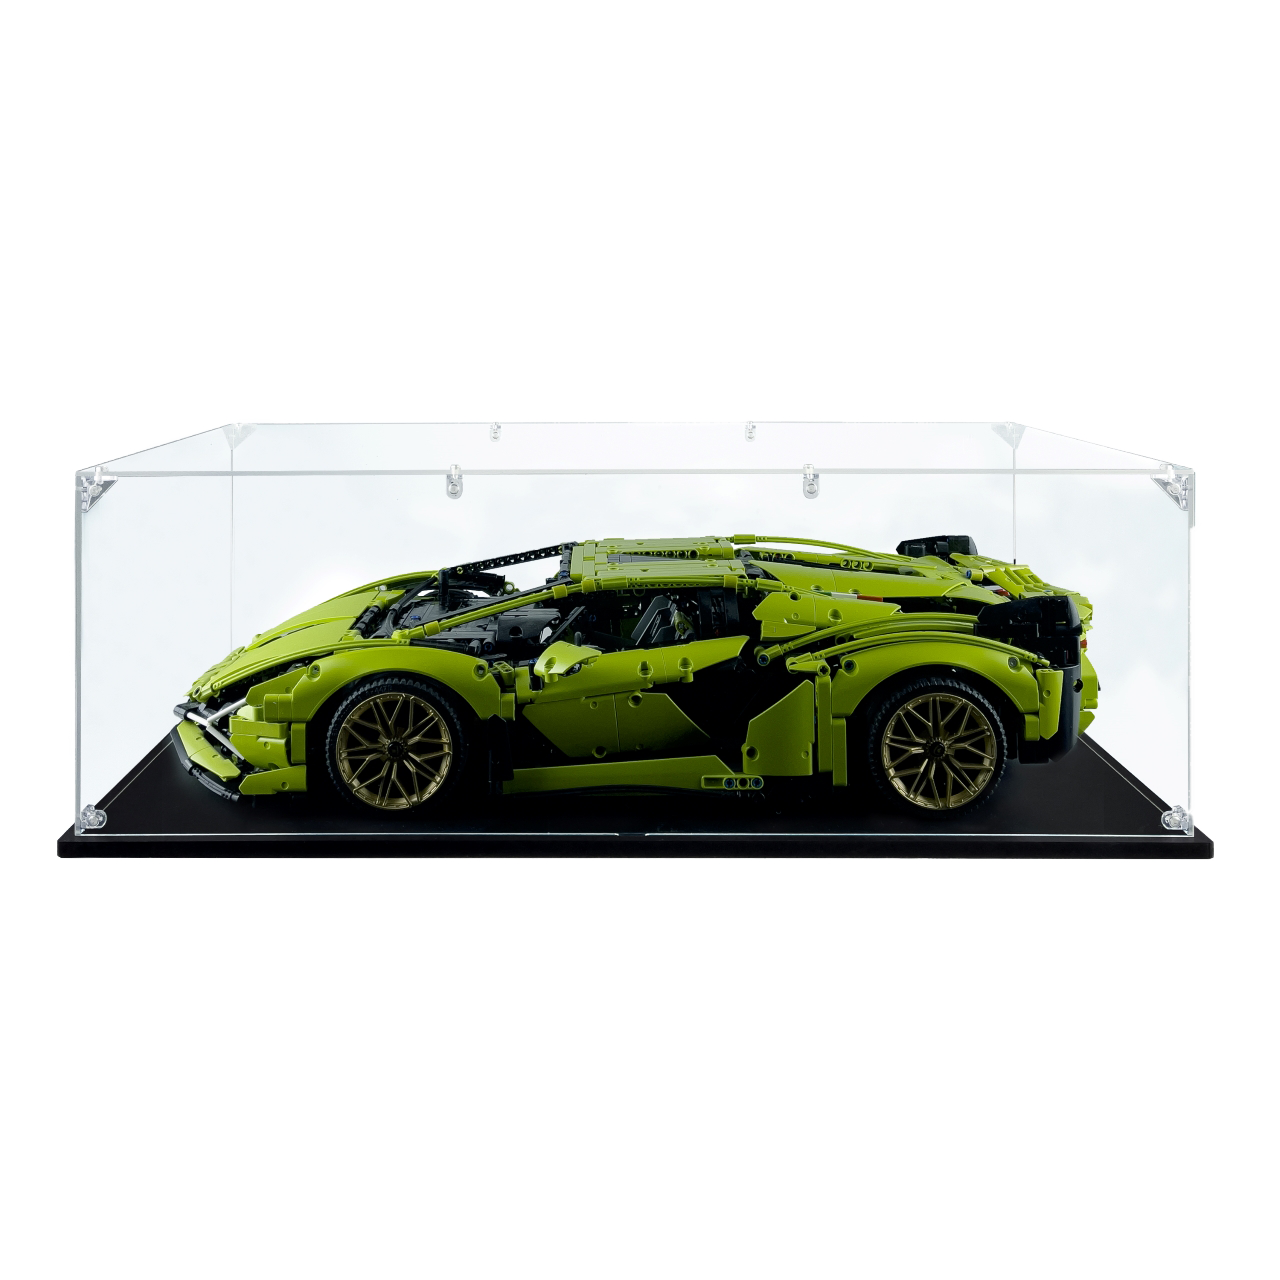 LEGO Lamborghini Sián FKP 37 - 42115